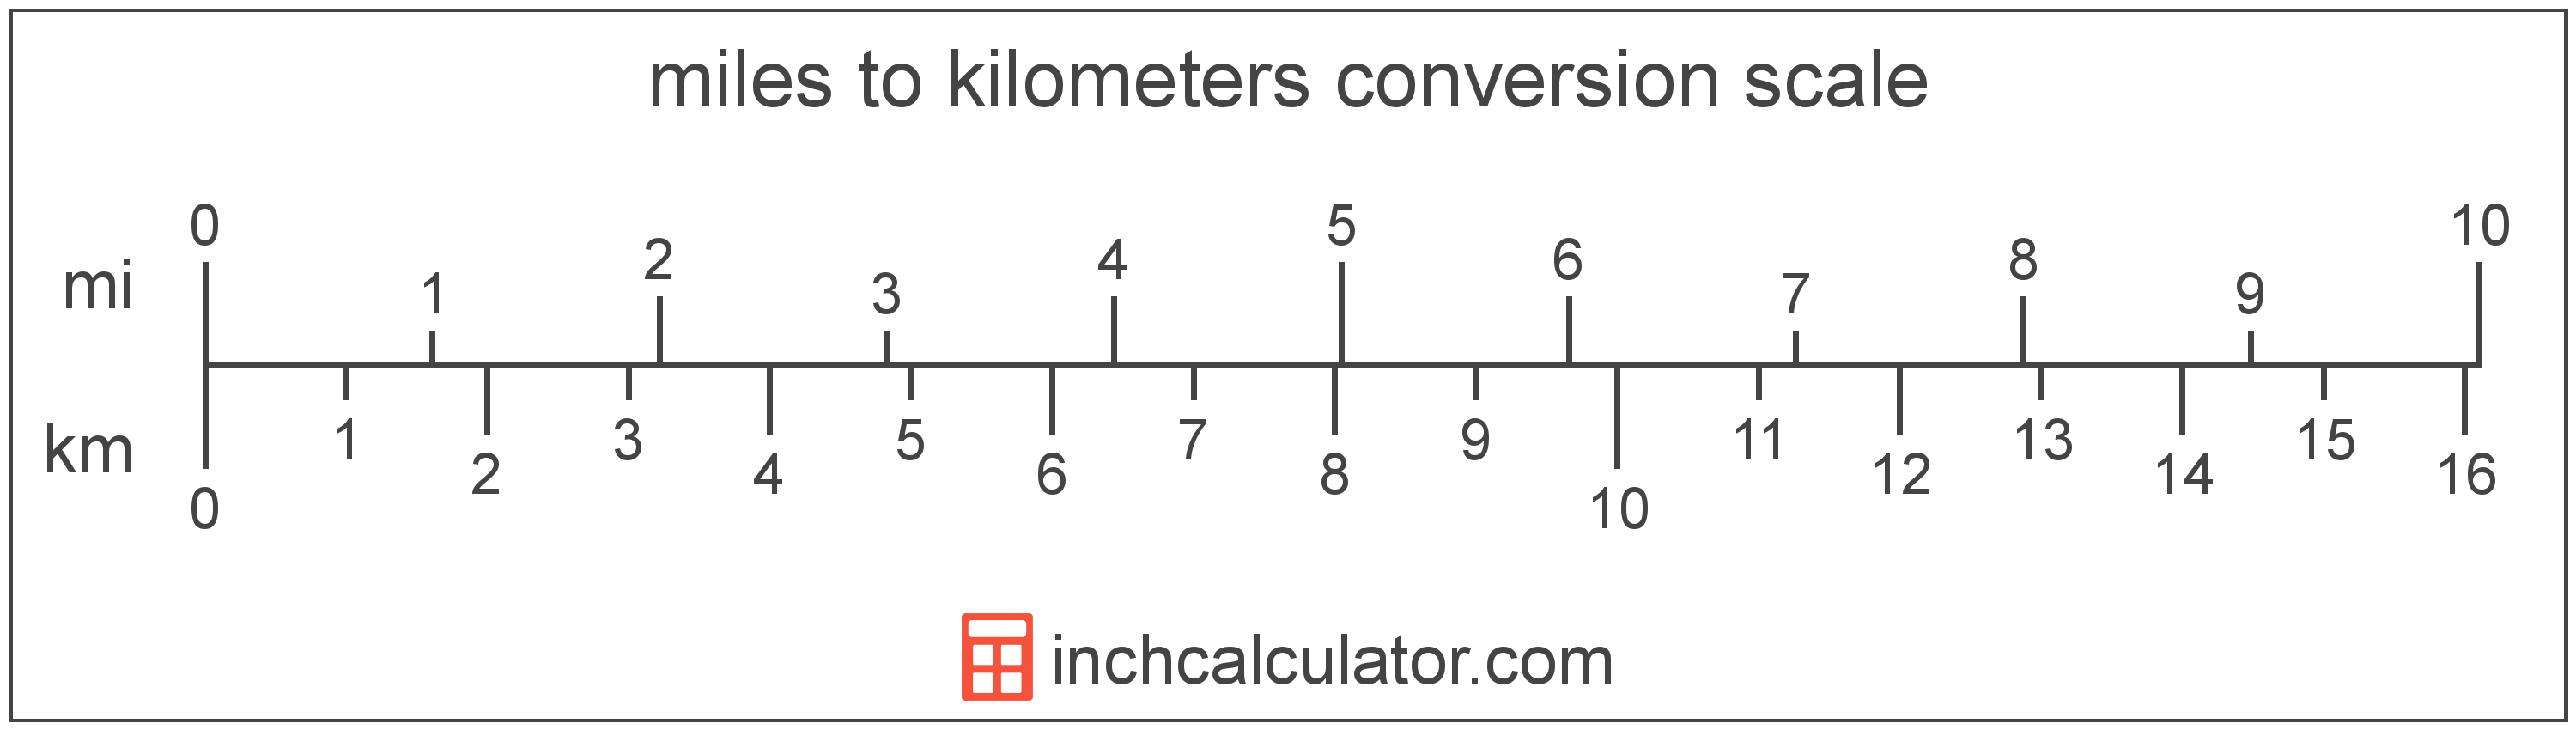 km-to-miles-converter-kilometers-to-miles-inch-calculator